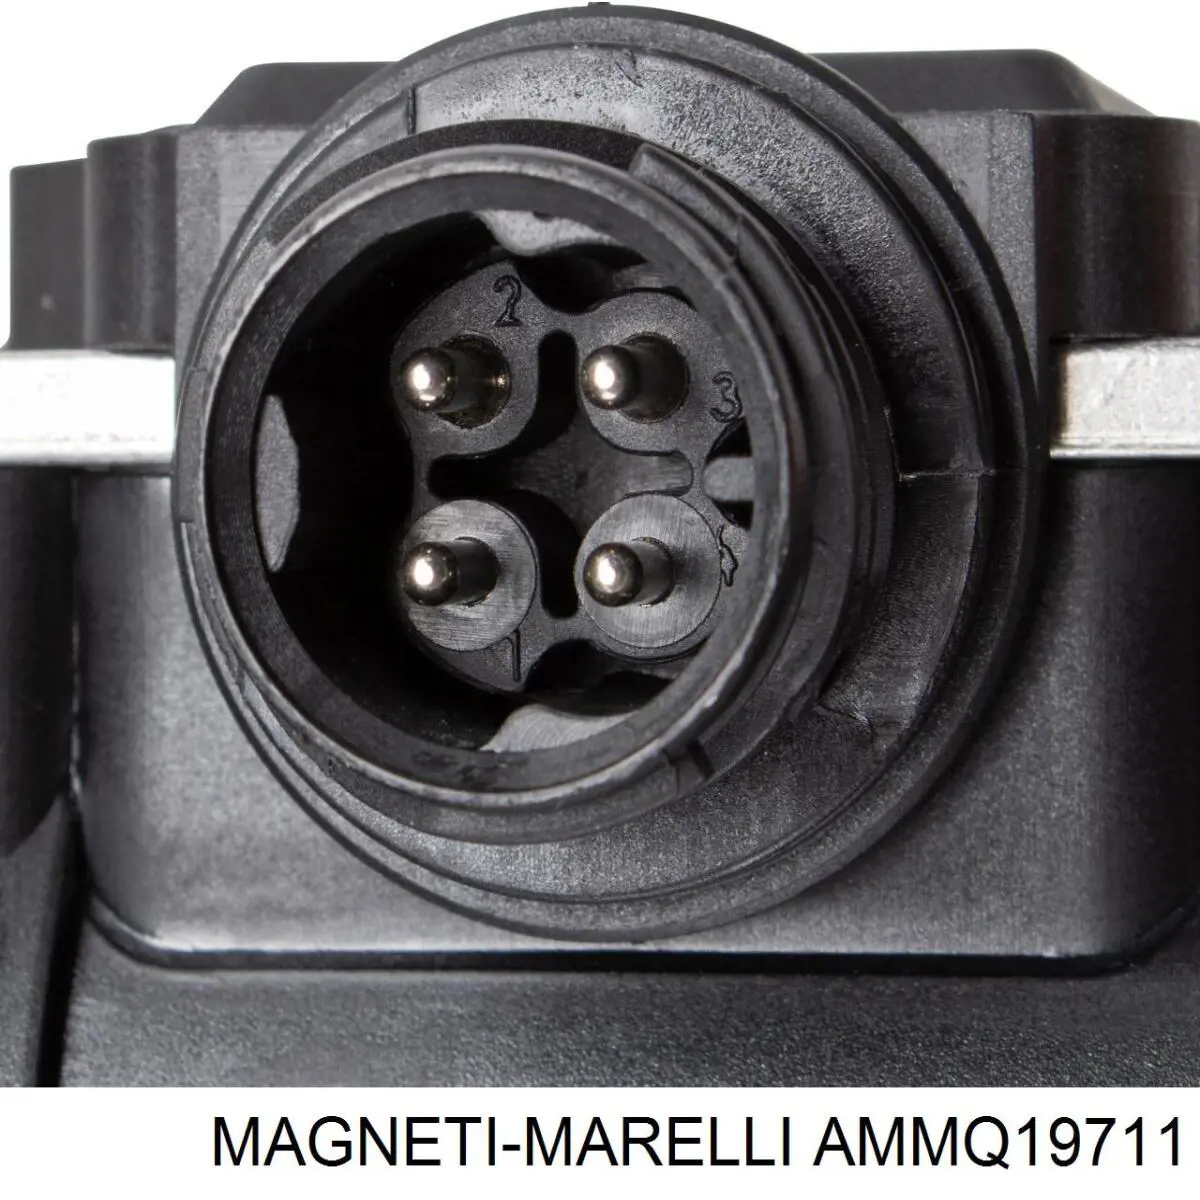 Sensor De Flujo De Aire/Medidor De Flujo (Flujo de Aire Masibo) AMMQ19711 Magneti Marelli